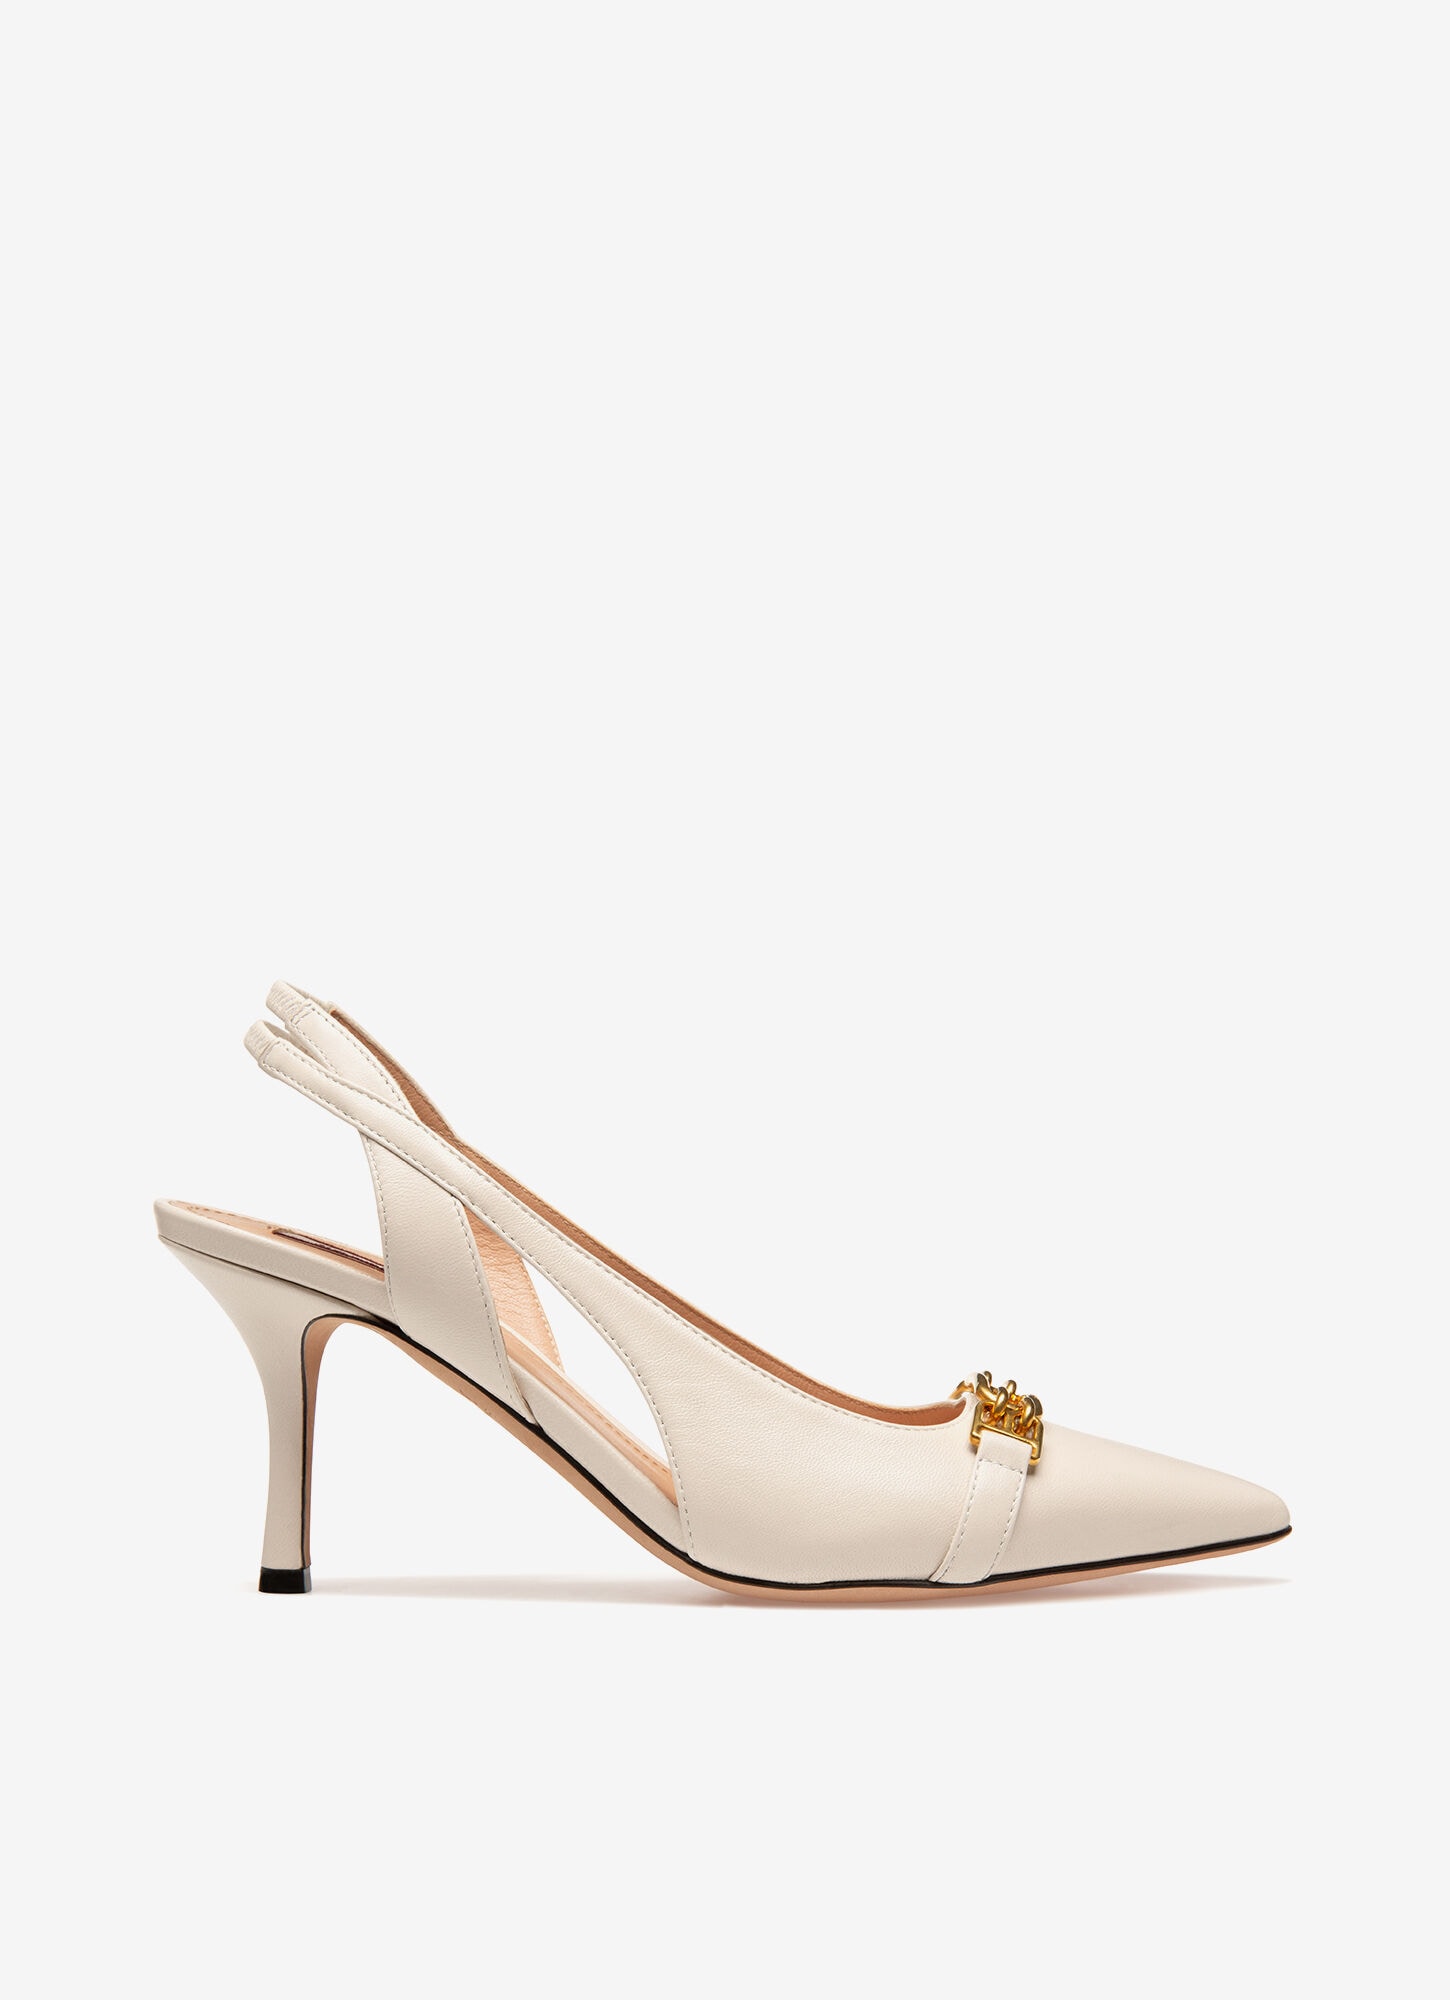 white shoes womens heels